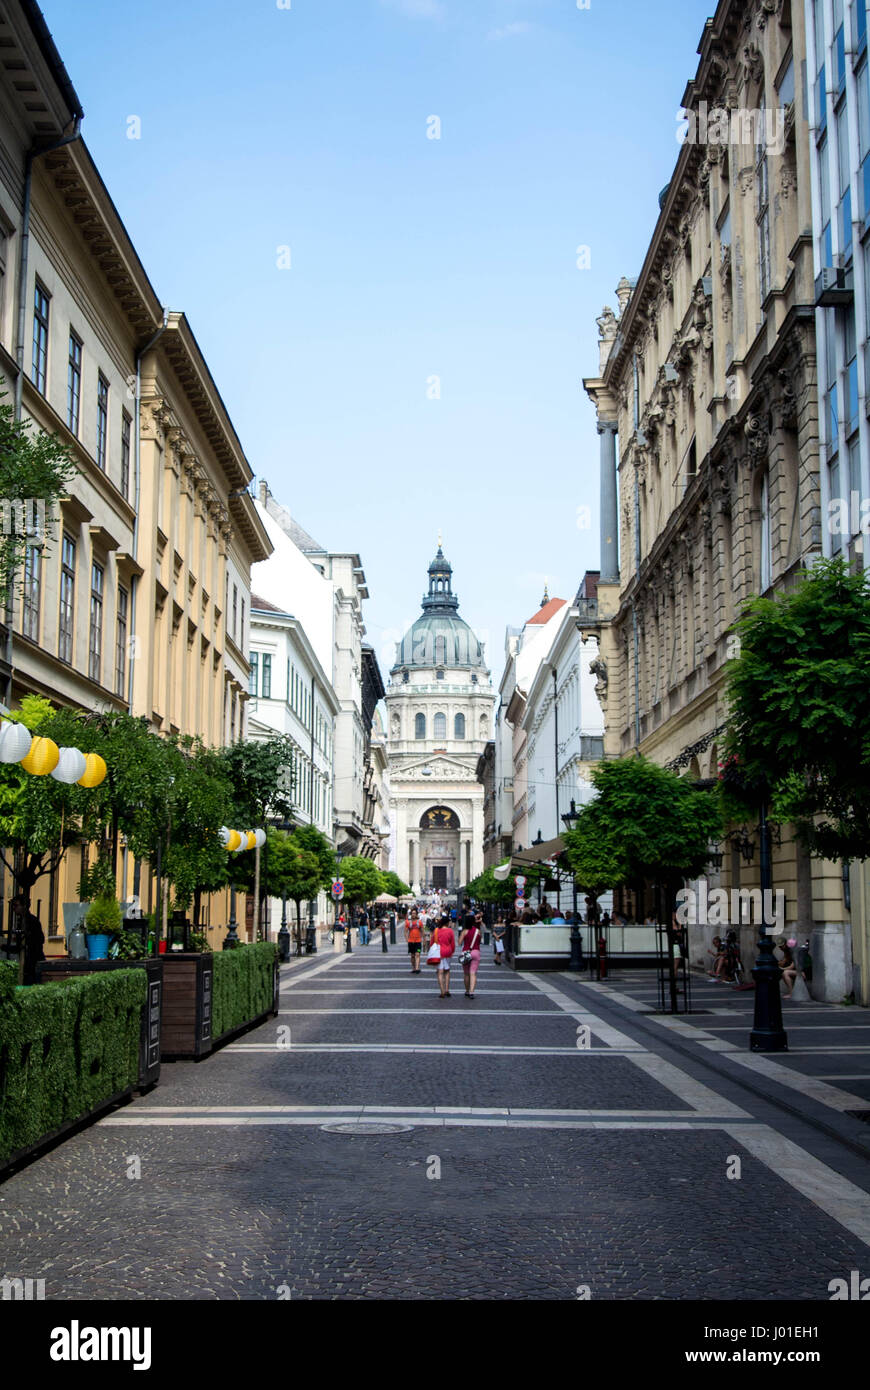 BUDAPEST, HUNGARY - JULY 24, 2016: A street of Budapest and St. Stephen's (Szent Istvan) Basilica, Hungary. Stock Photo